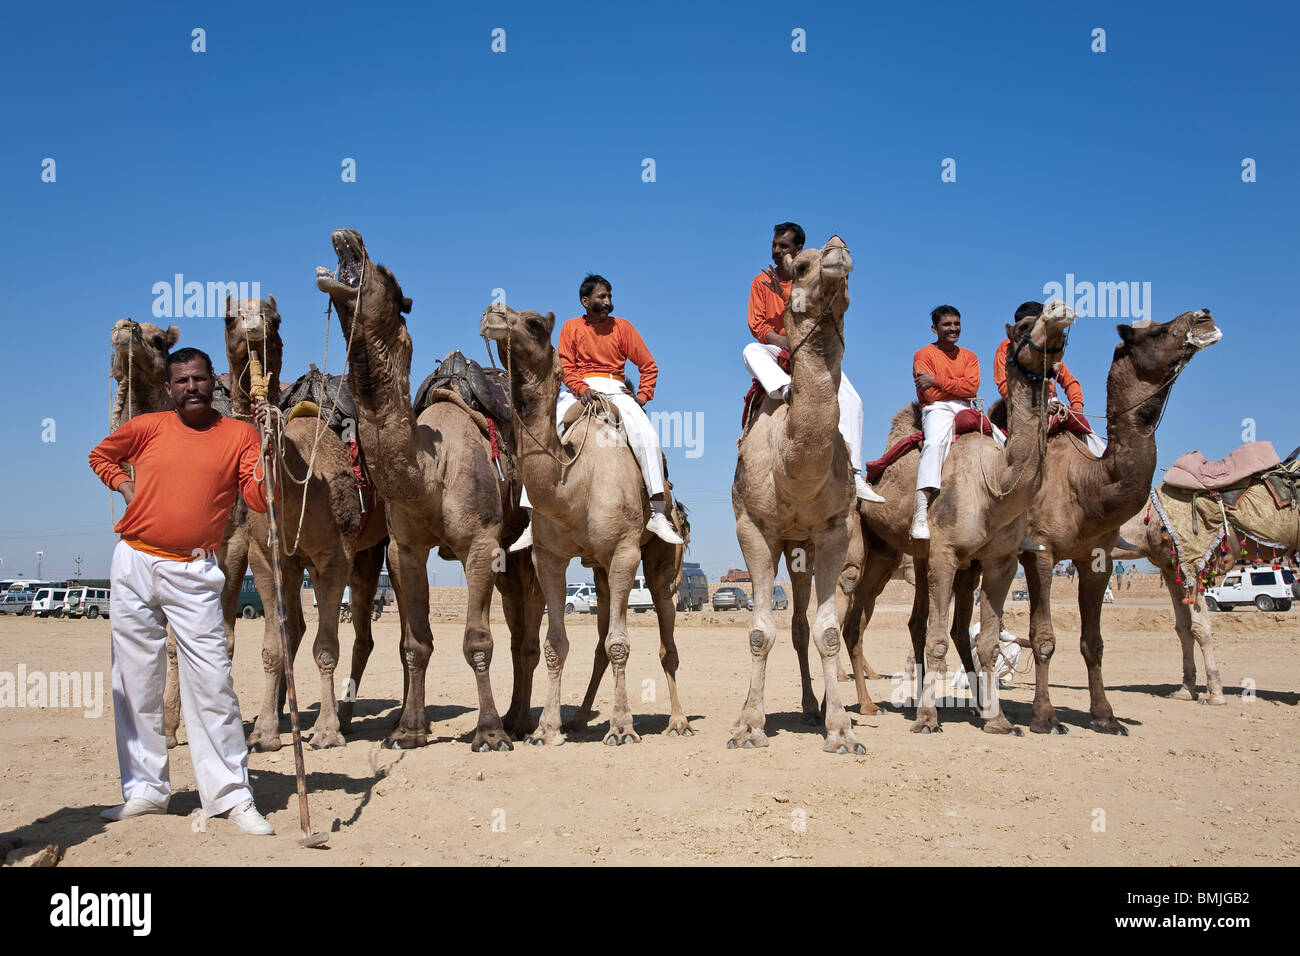 Camel giocatori di Polo. Jaisalmer. Il Rajasthan. India Foto Stock